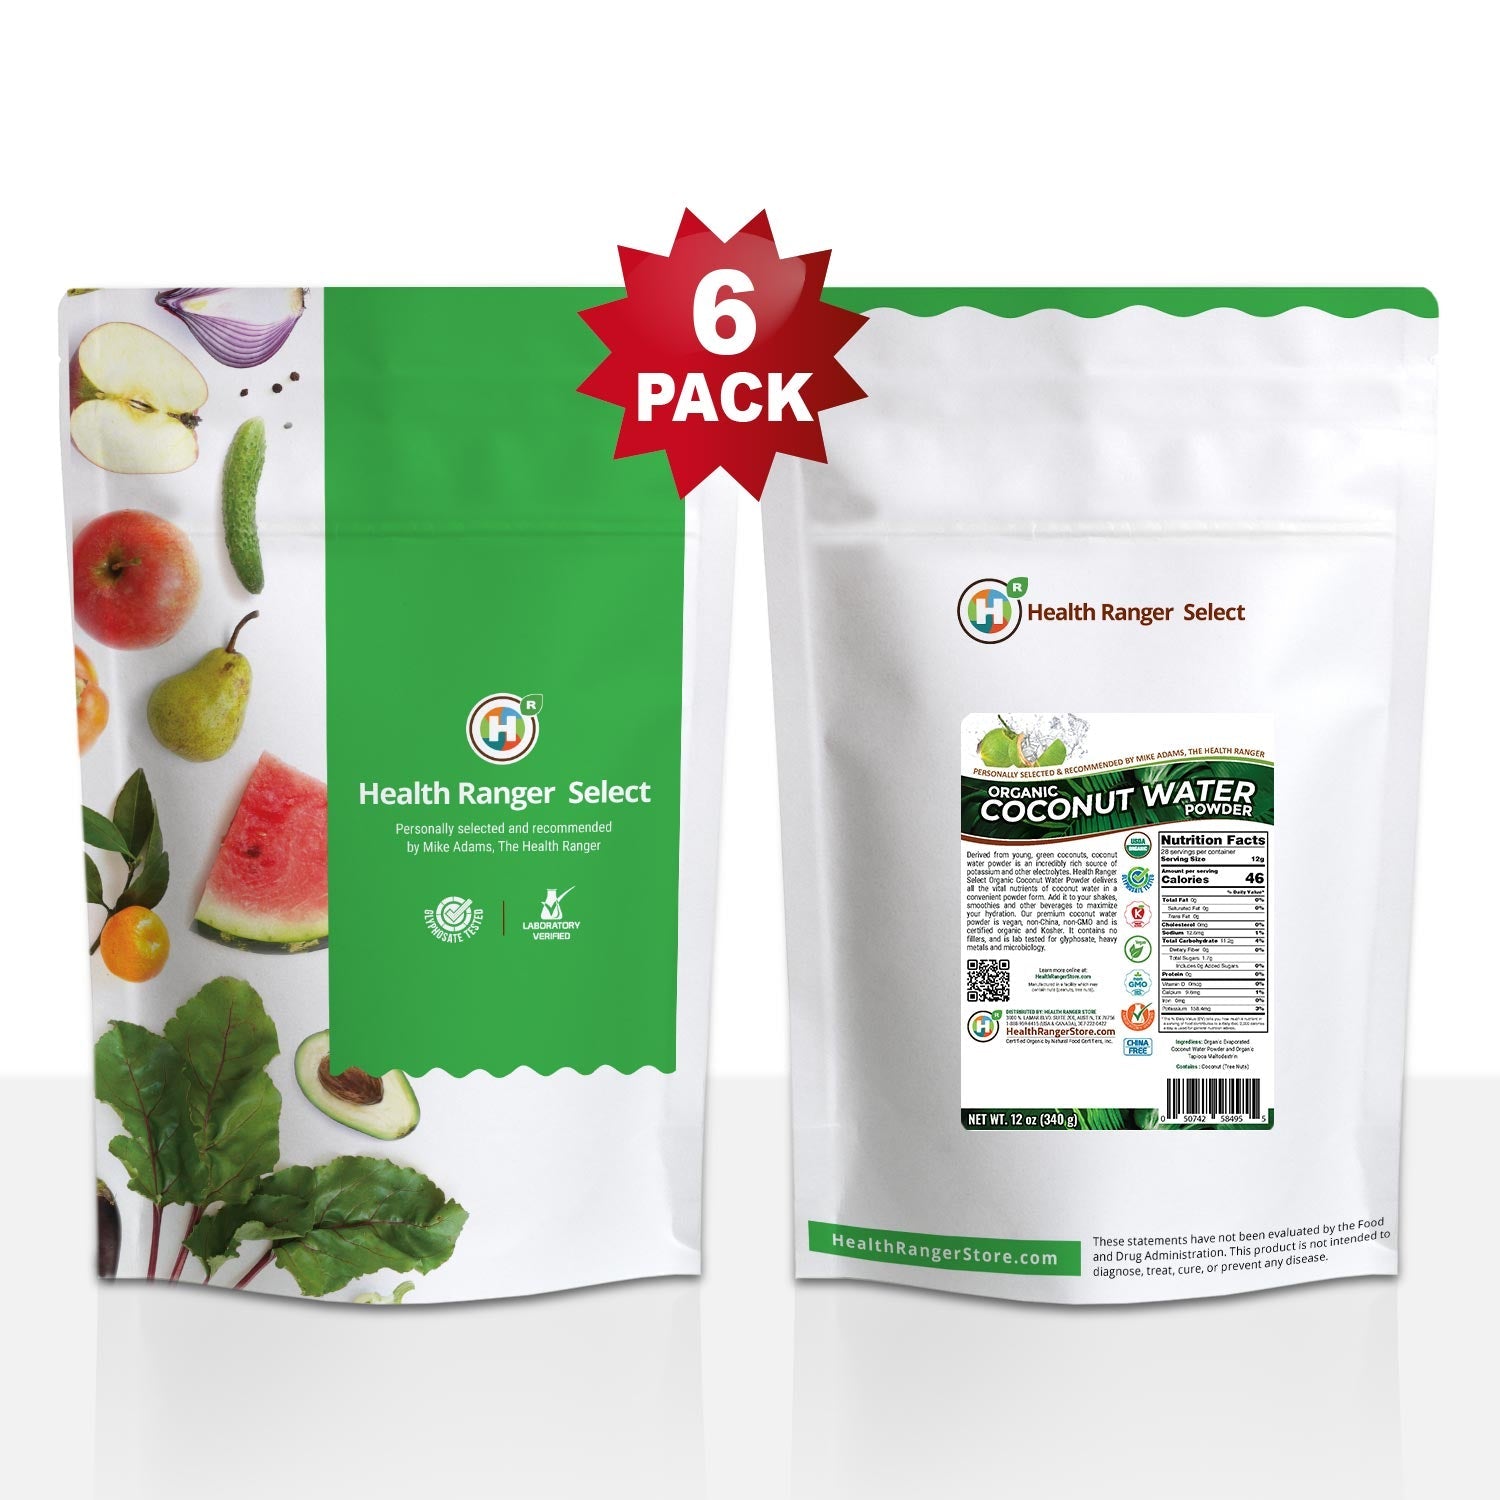 Organic Coconut Water Powder 12oz (340g) (6-Pack)